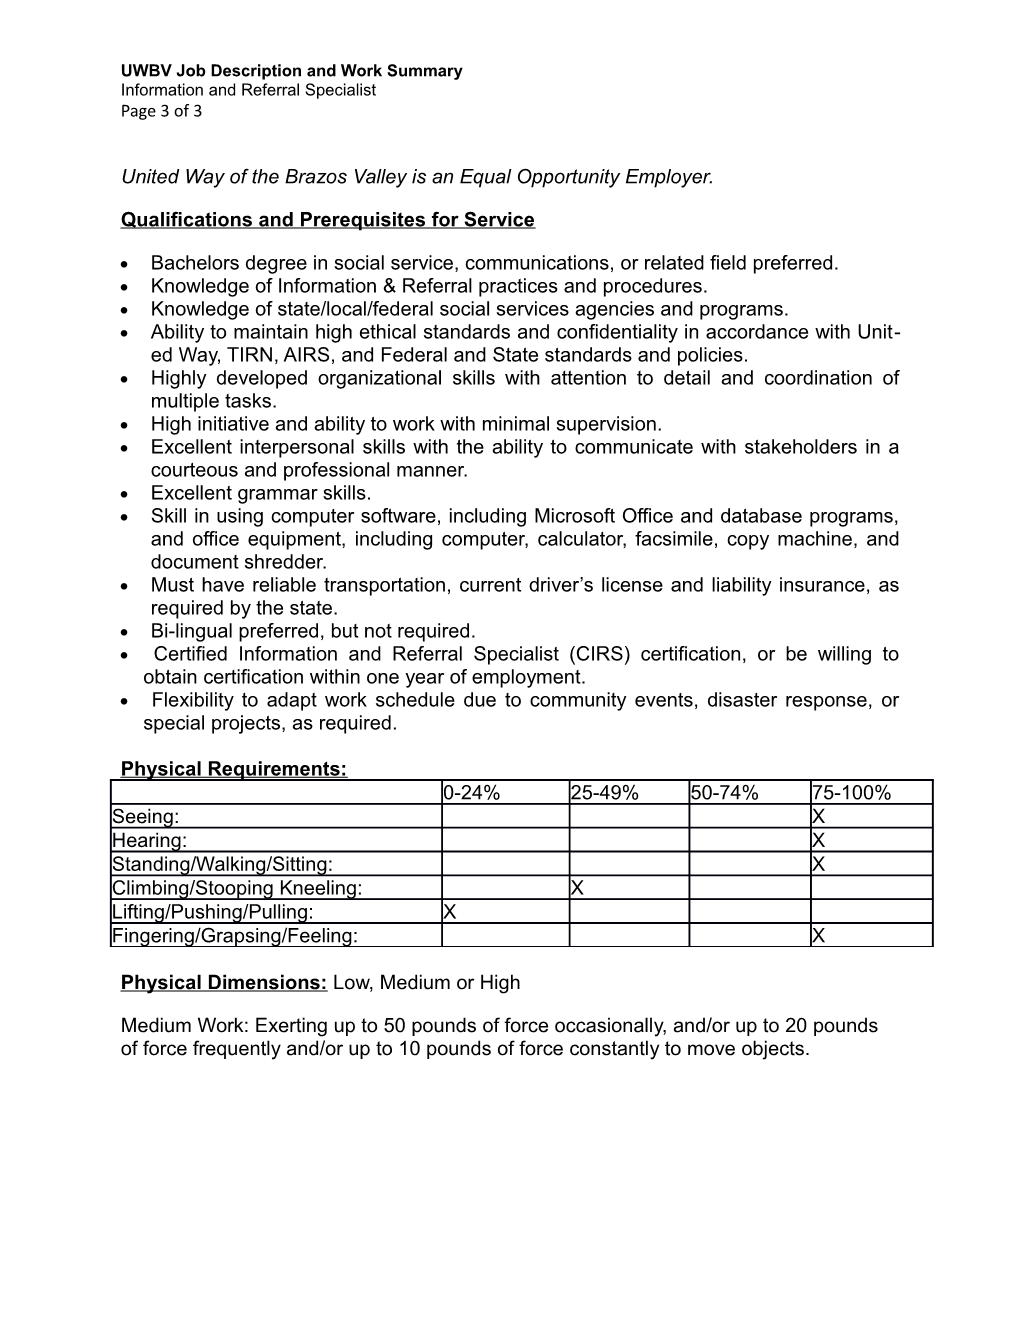 UWBV Job Description and Work Summary